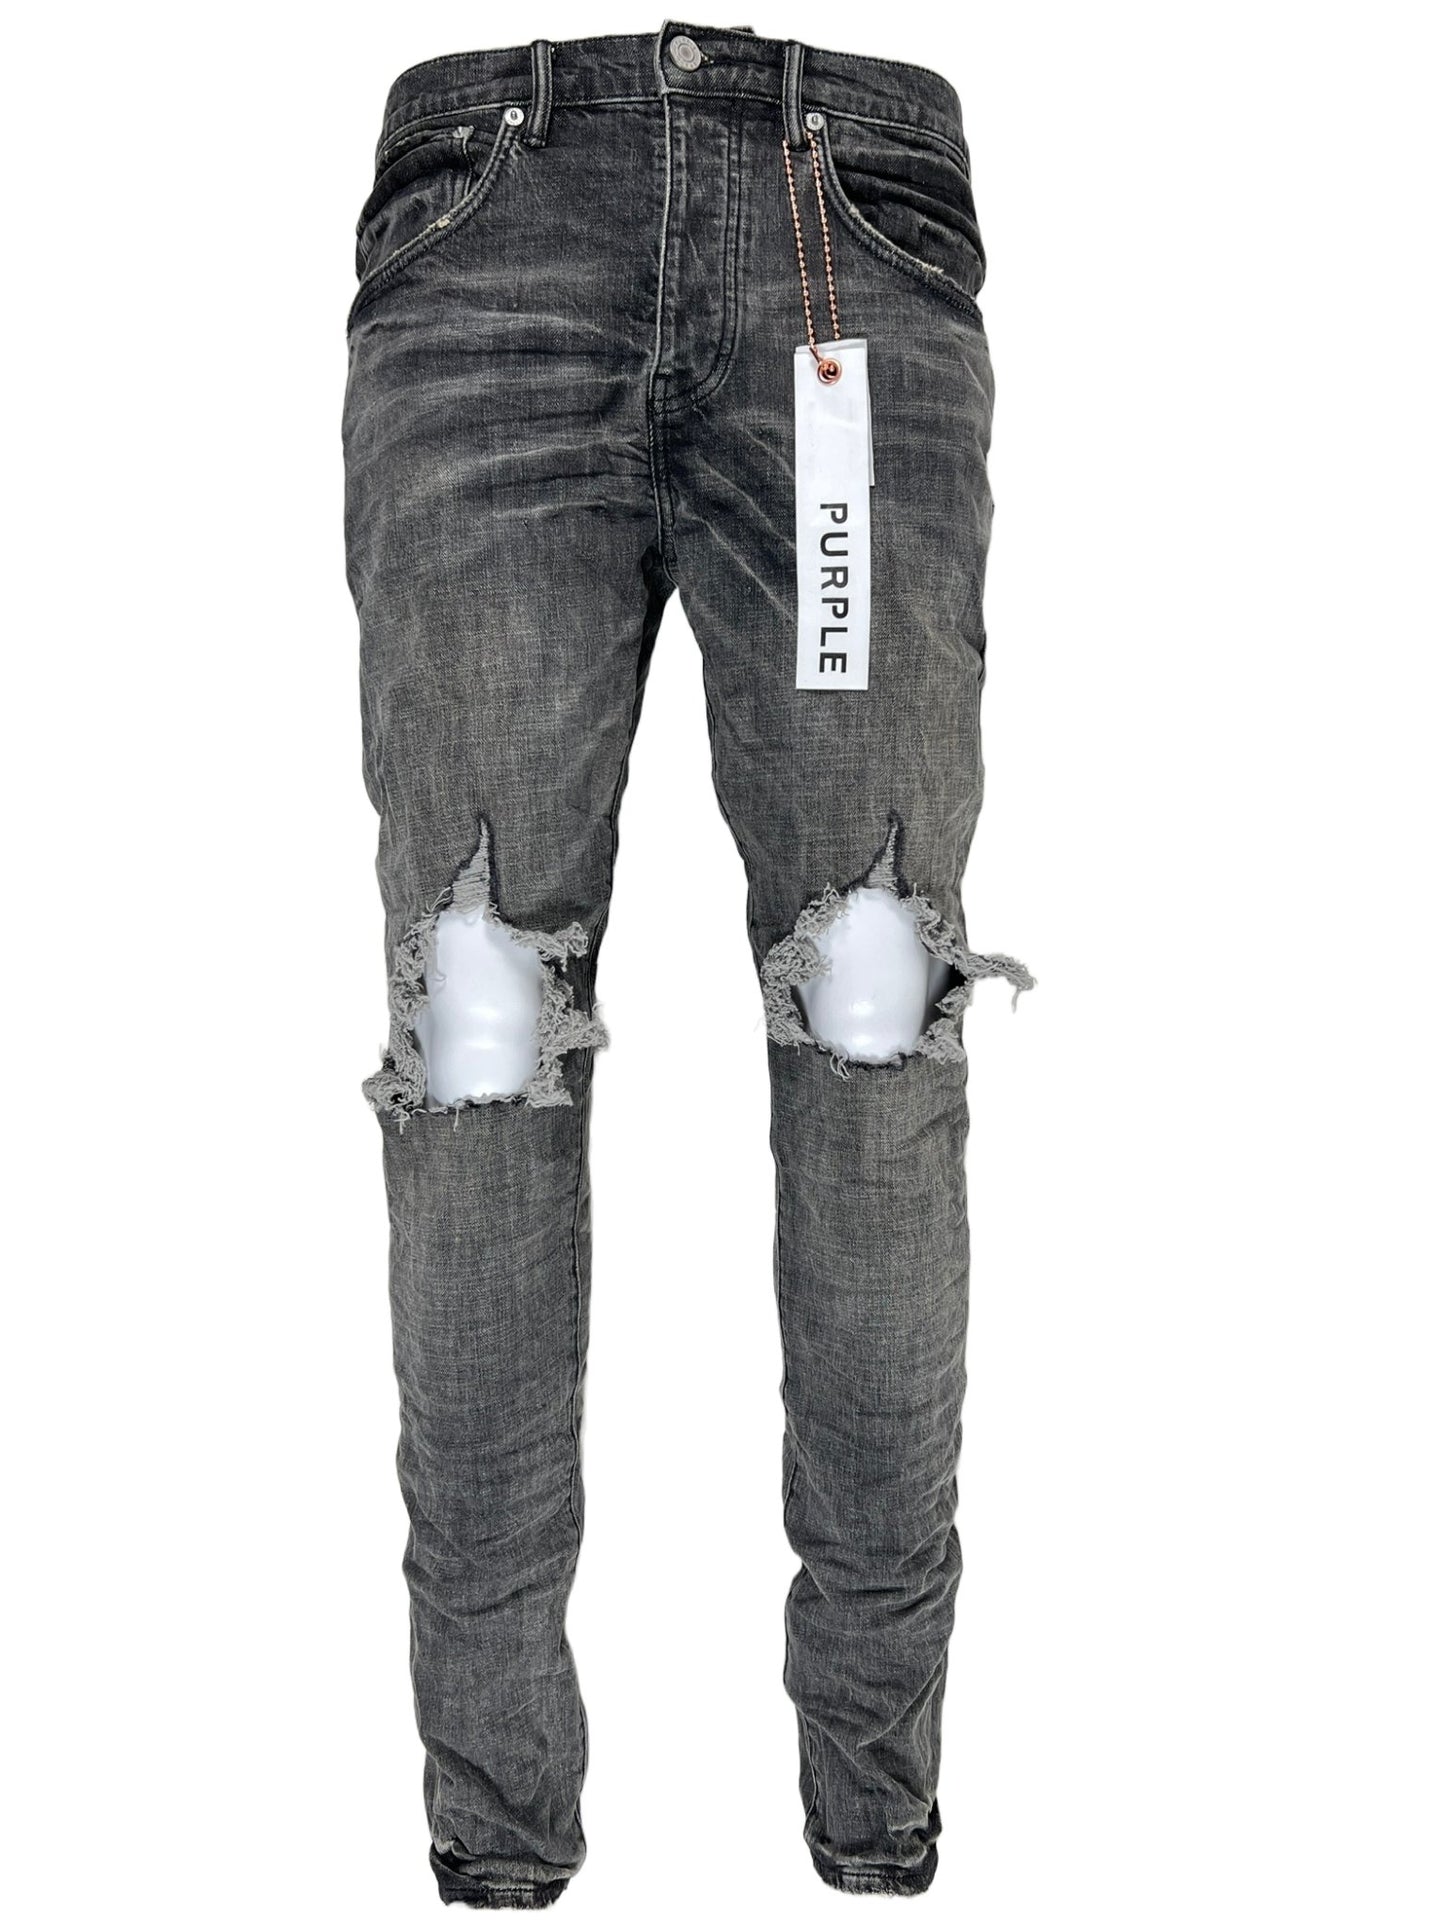 Black New Purple brand Men's hole personality fashion jeans SZ 29